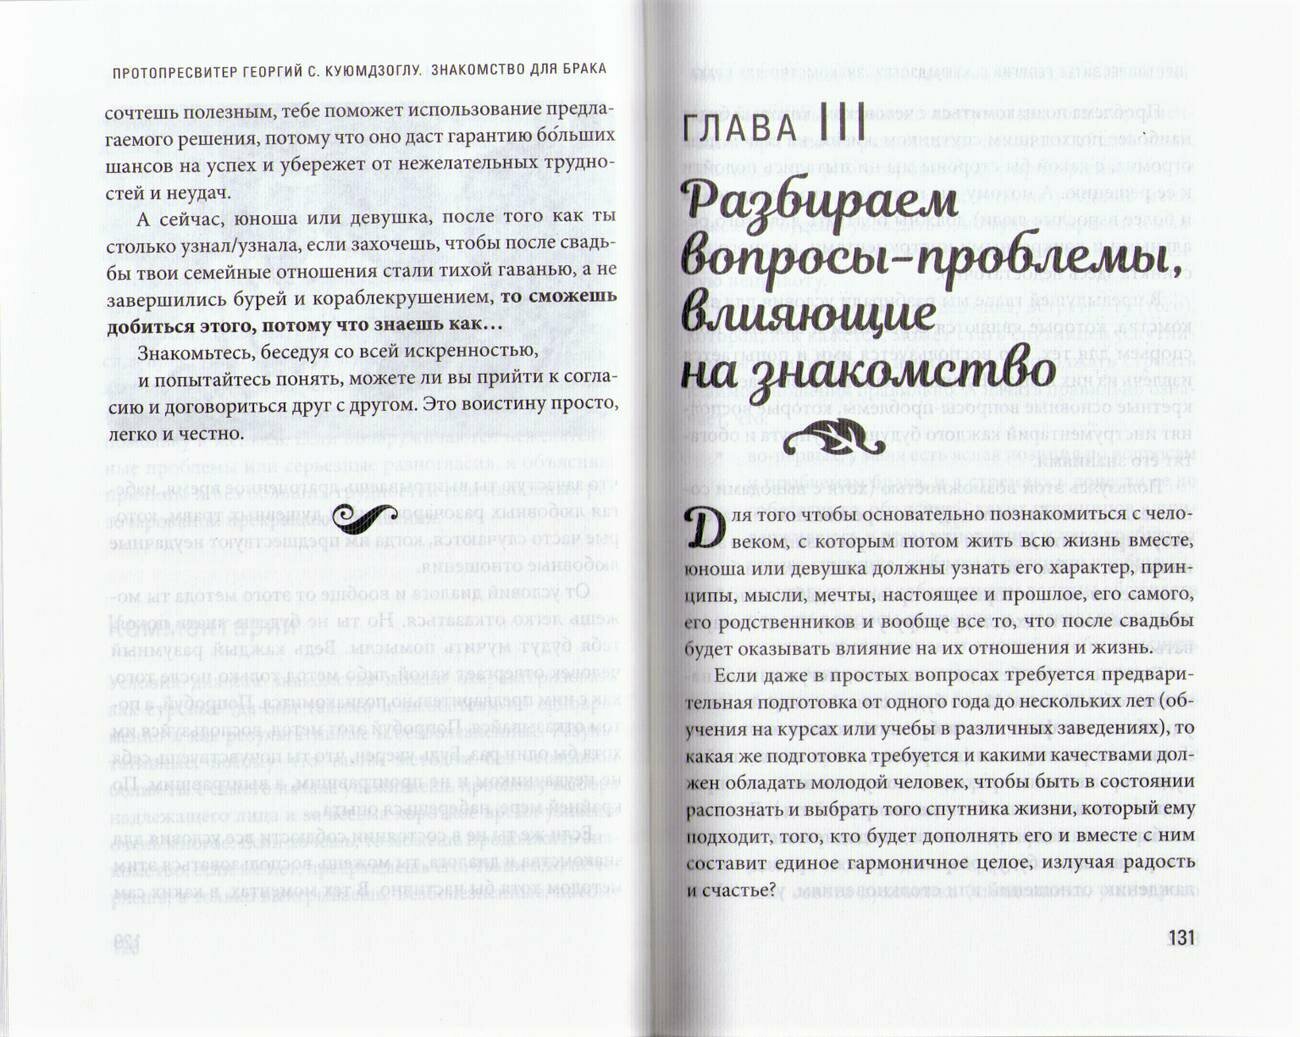 Знакомство для брака (Протопресвитер Георгий С. Куюмдзоглу) - фото №17